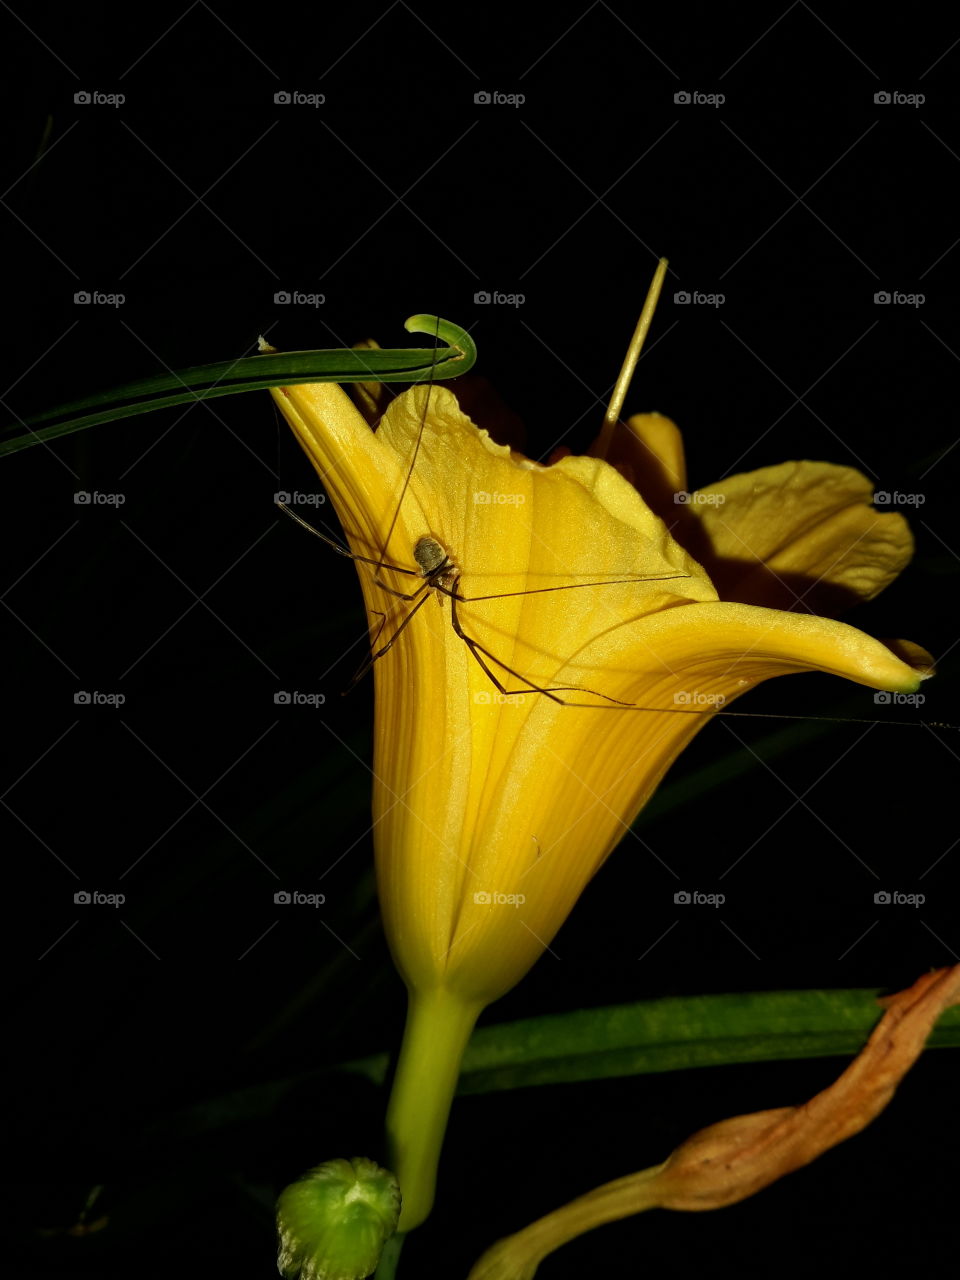 Spider on the flower.